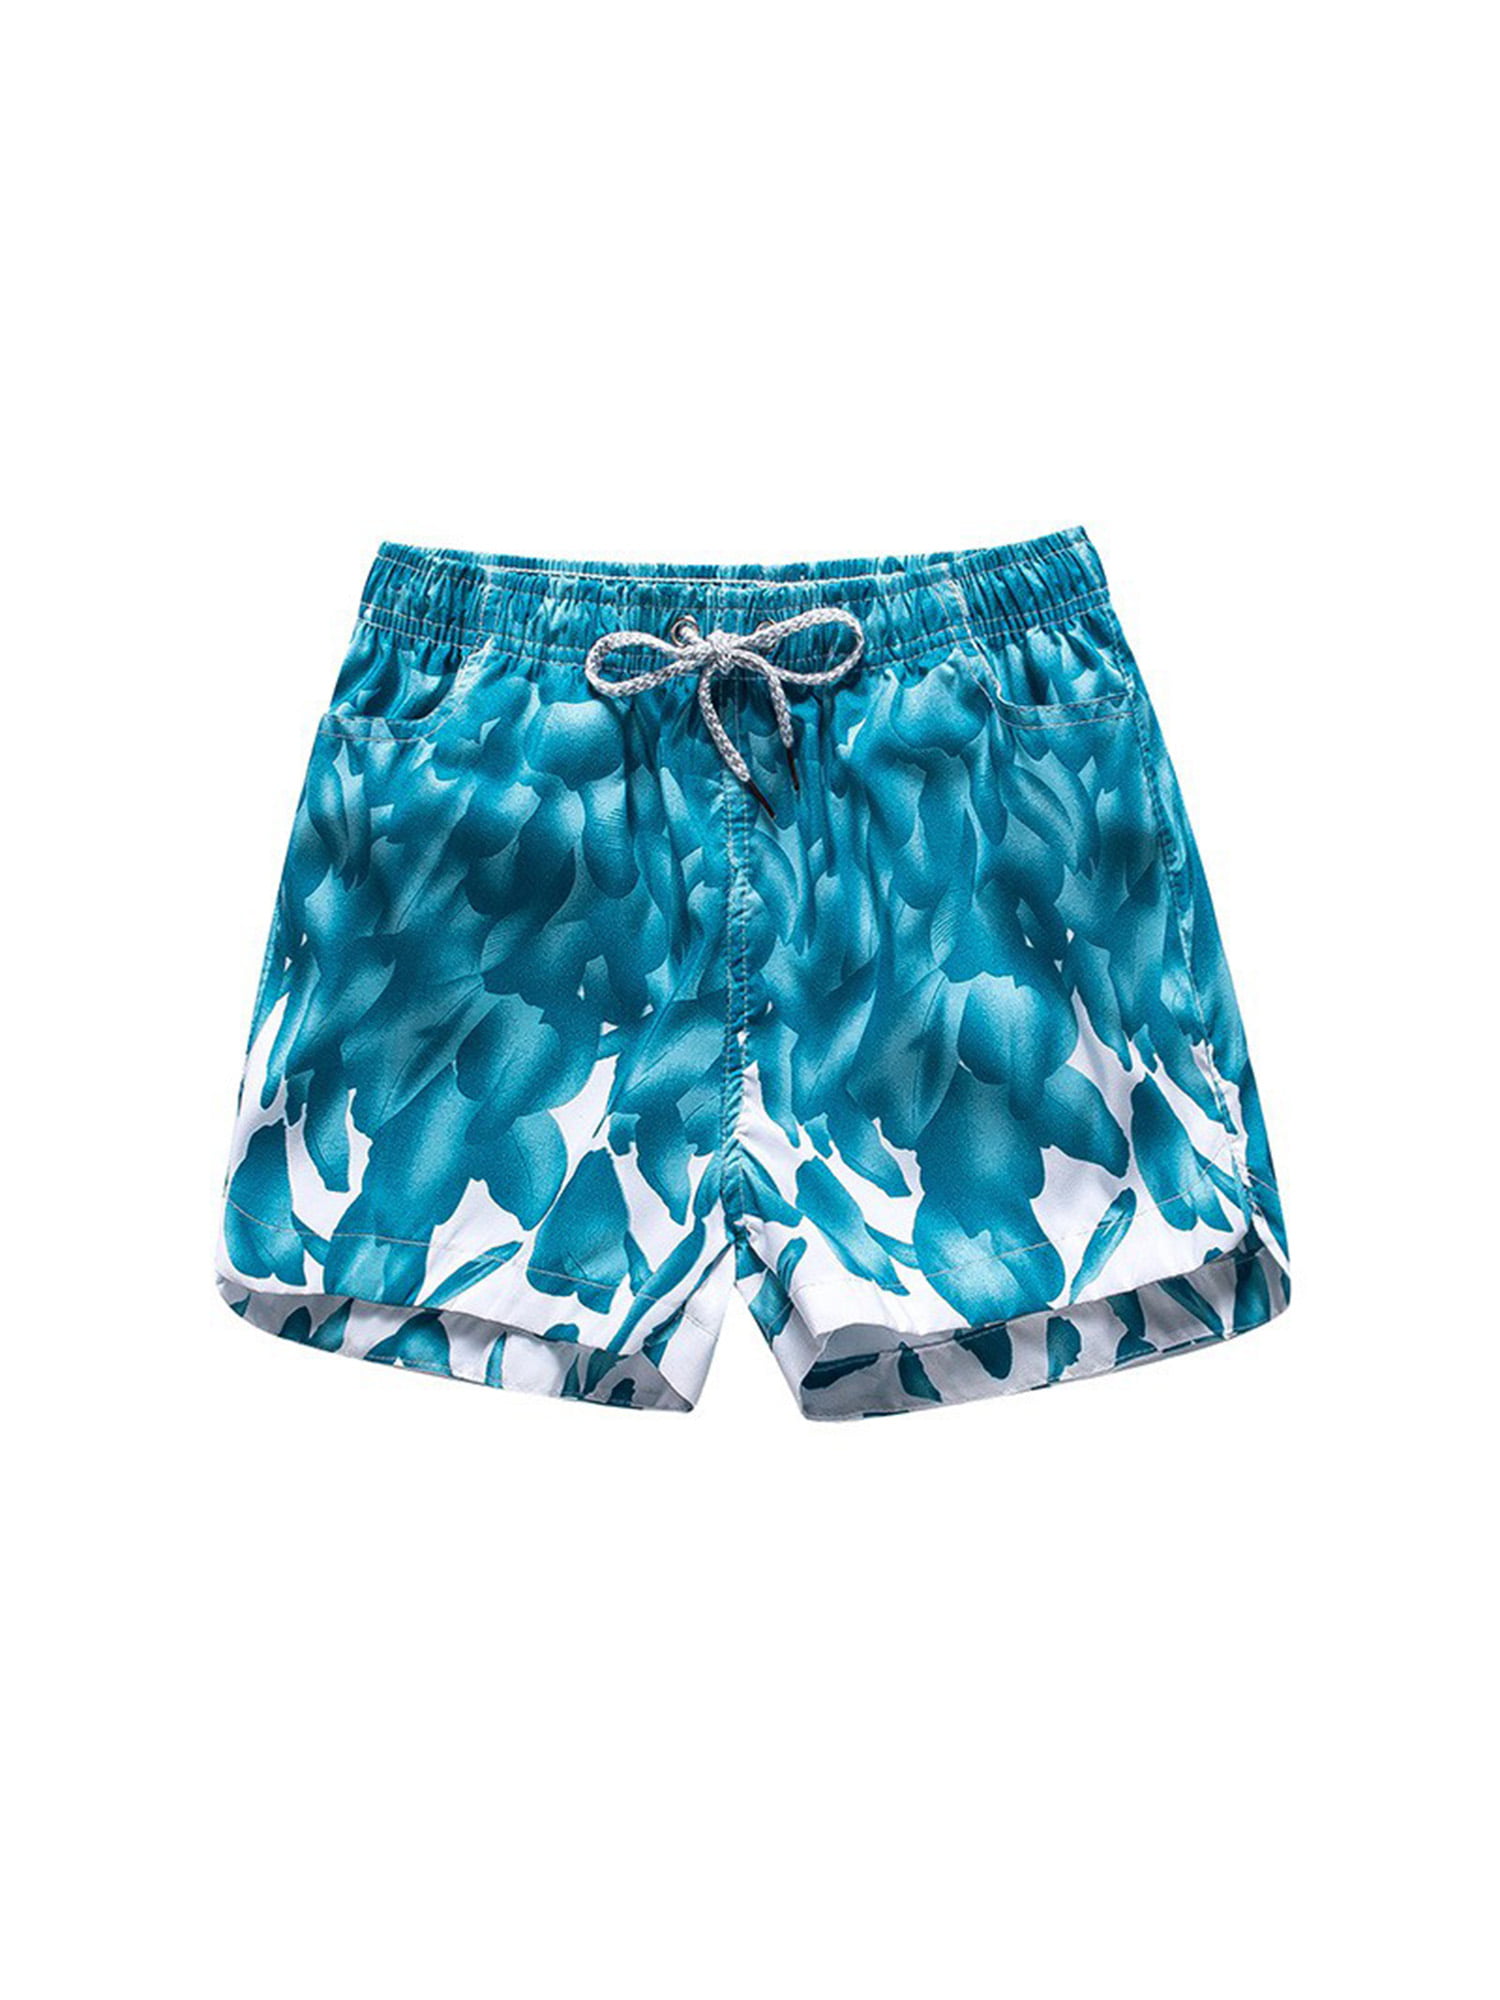 Rainbow Leopard Print Mens Quick Dry Beach Shorts Swimwear Swim Trunks Board Shorts with Pocket 